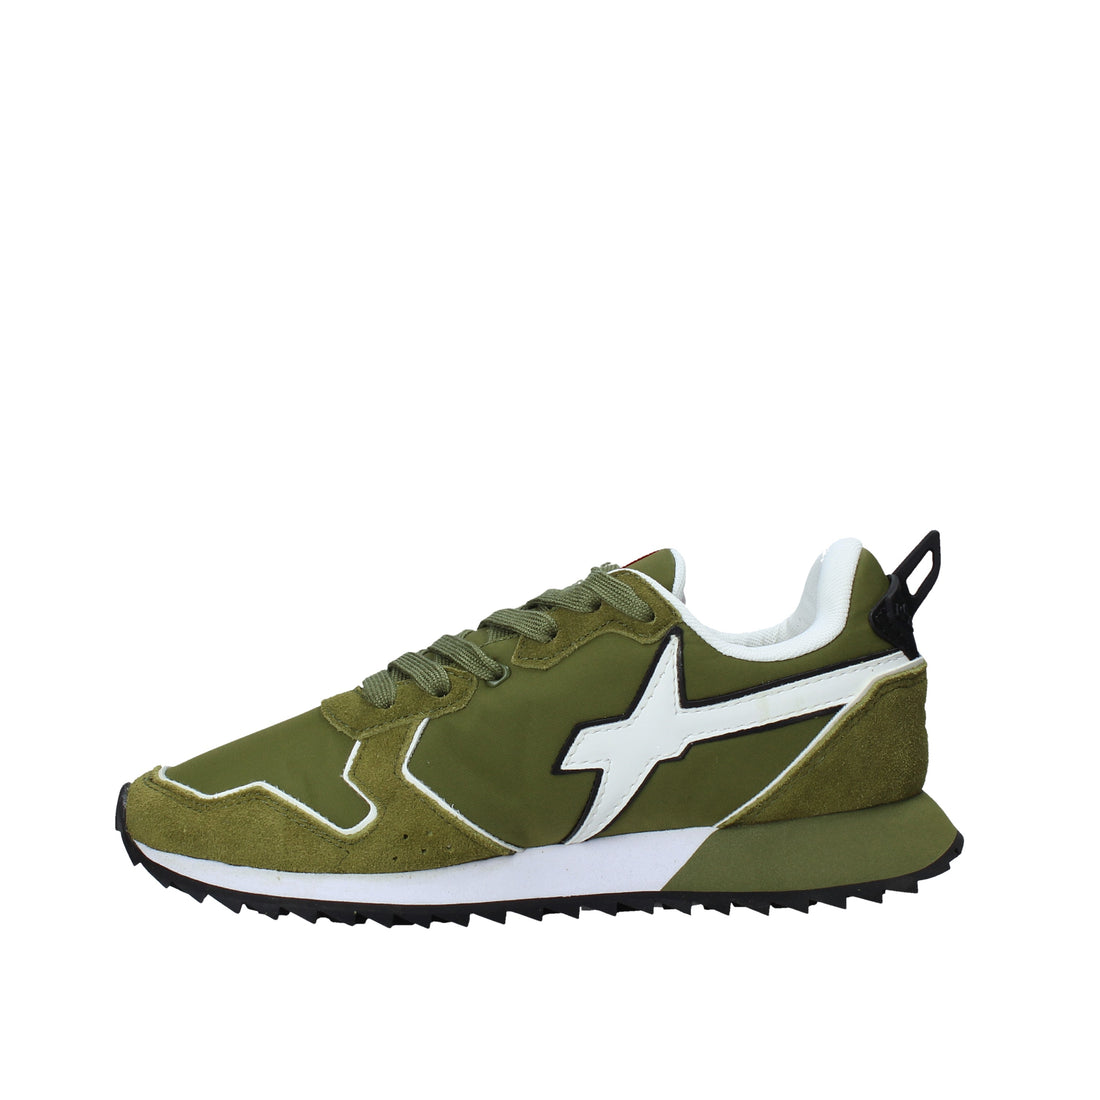 Sneakers Verde Scuro W6yz